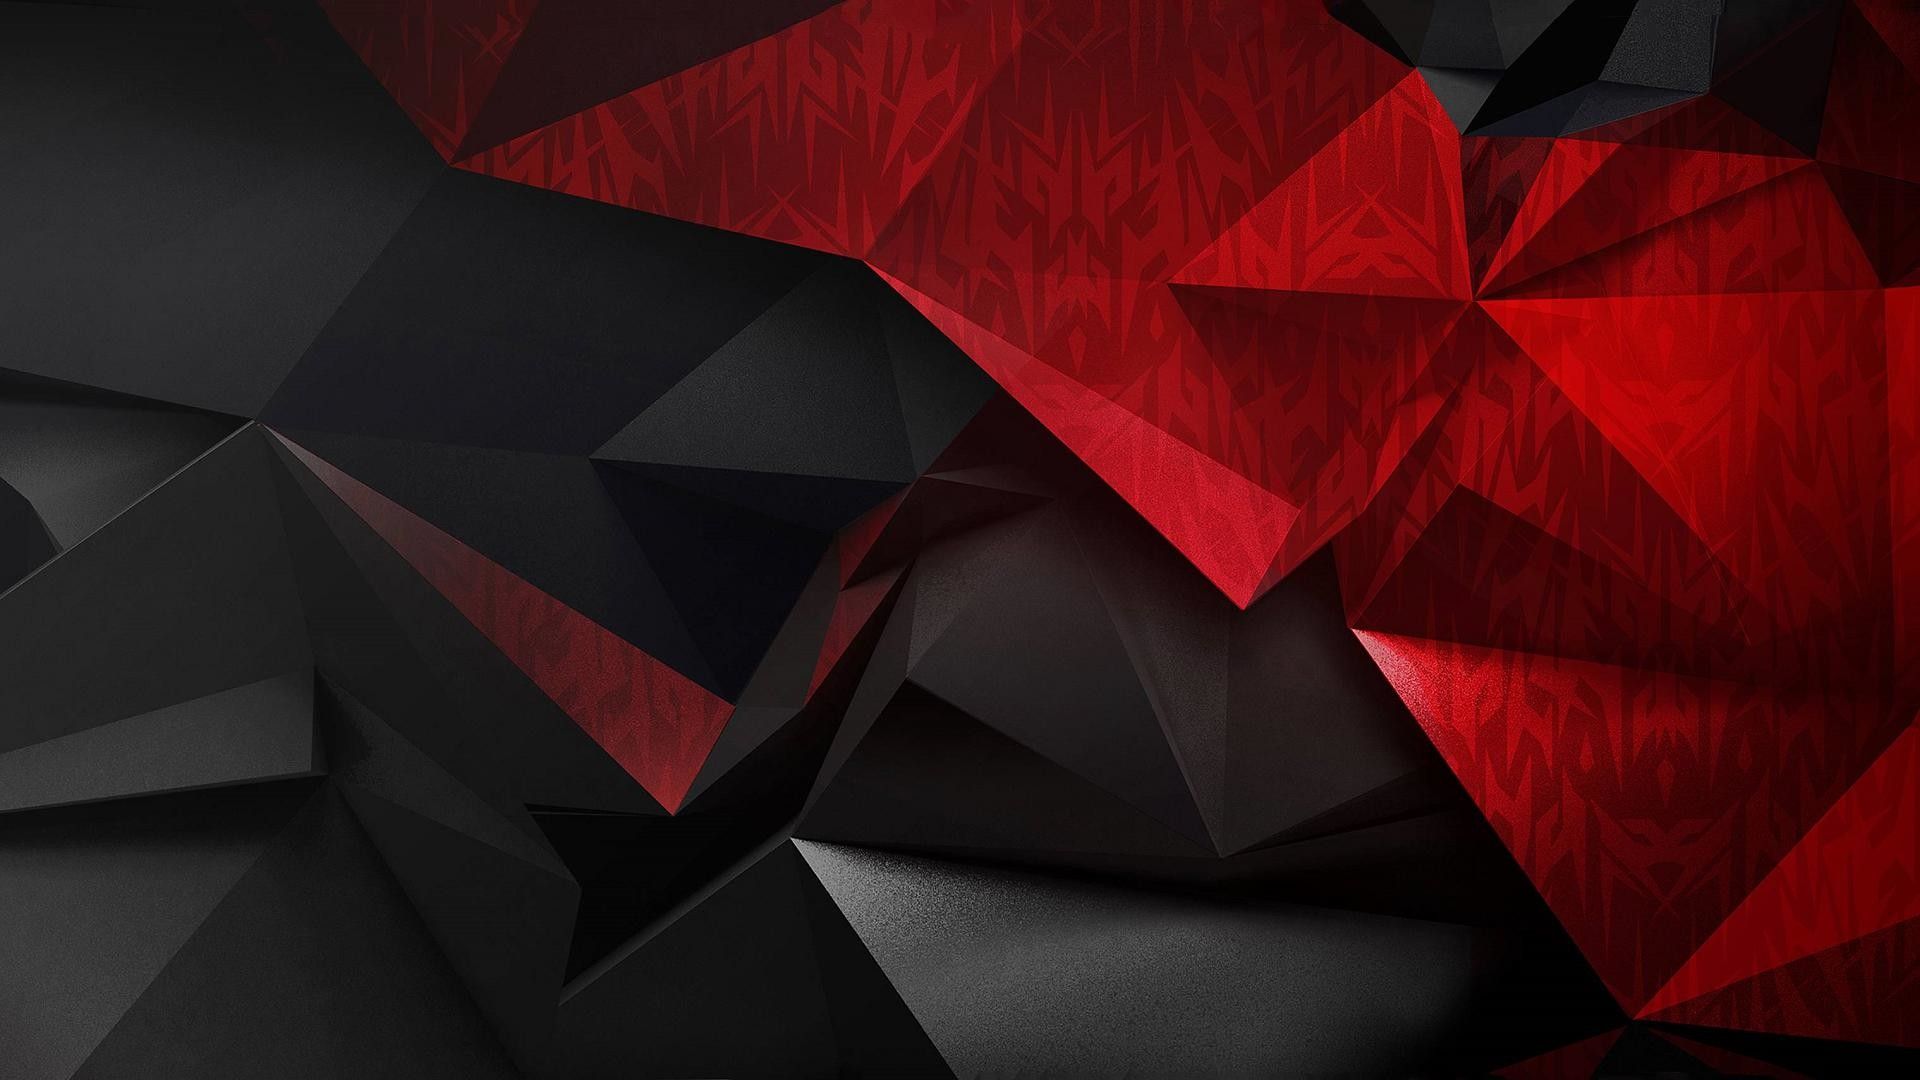 acer predator wallpaper,rojo,negro,triángulo,modelo,diseño